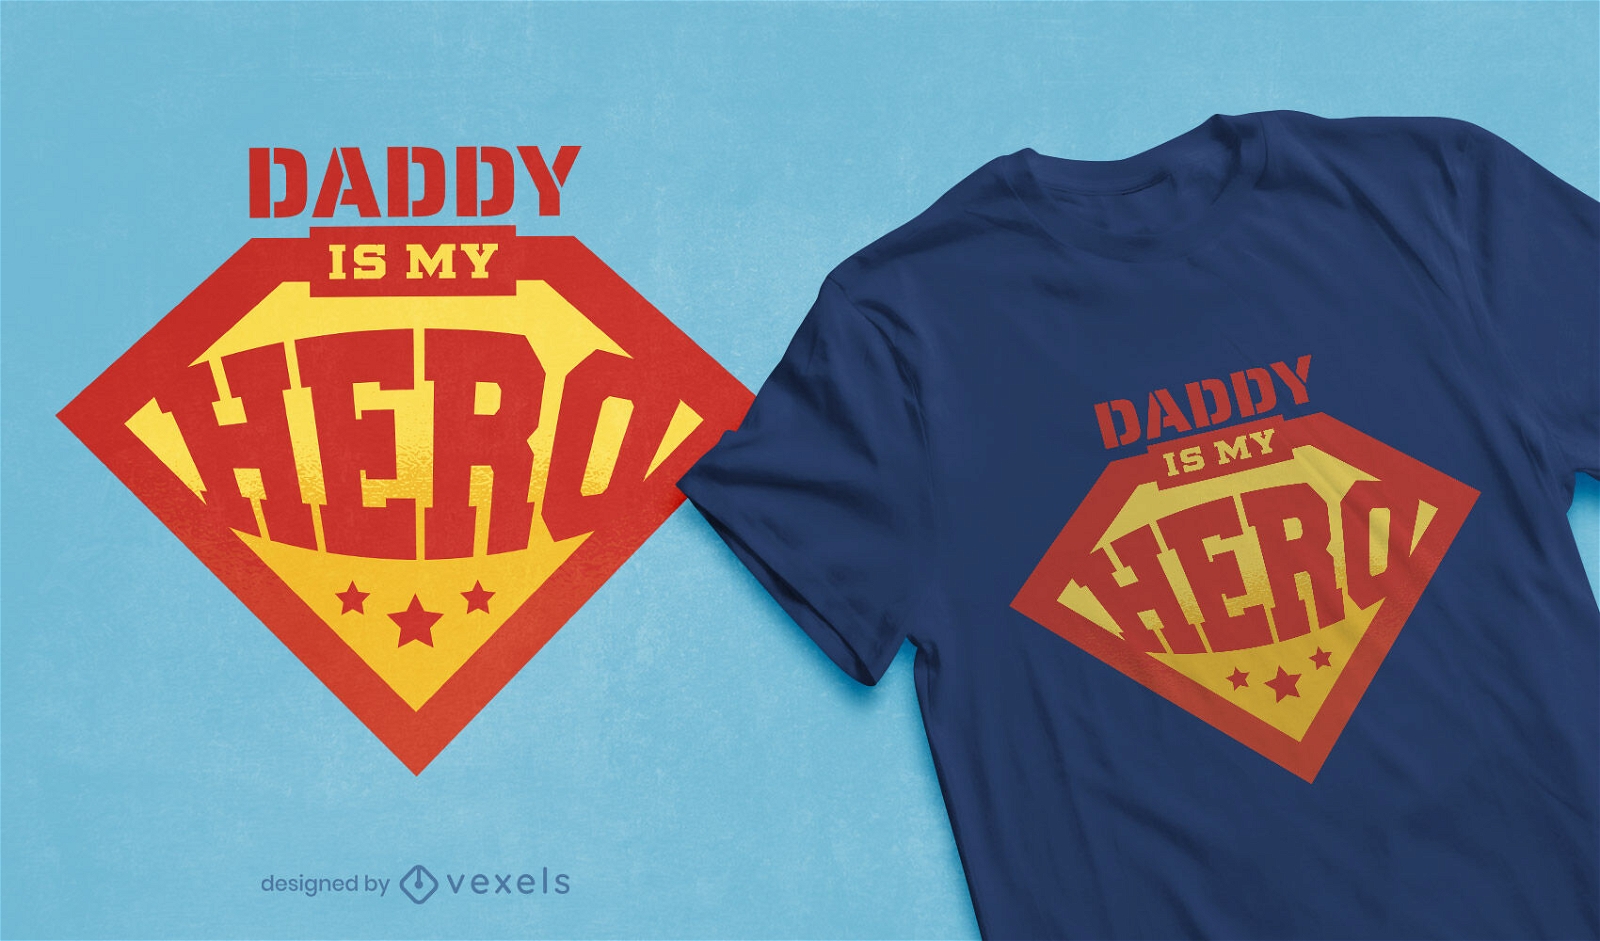 Daddy is my hero t-shirt design